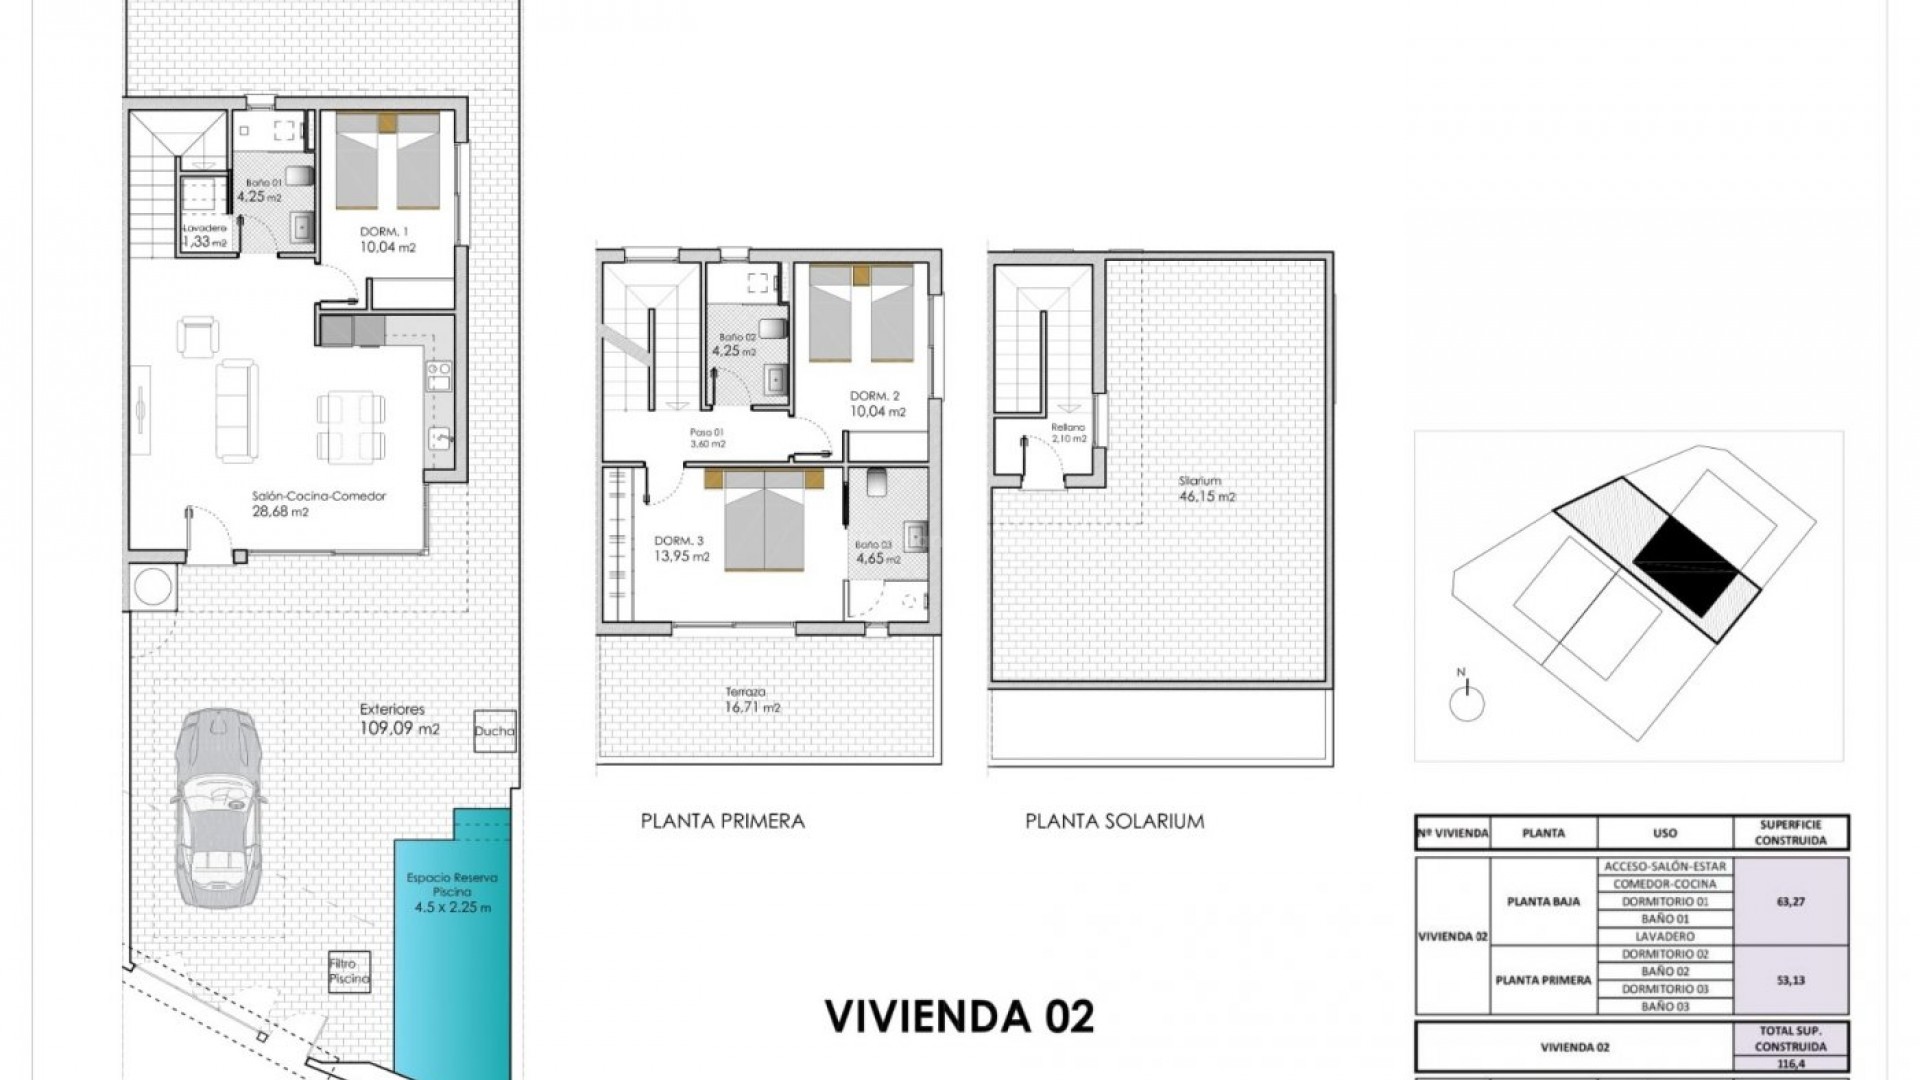 New build 4 semi-detached houses in Pilar de la Horadada, 3 bedrooms, 3 bathrooms, open plan kitchen with living room, garden with private pool and parking